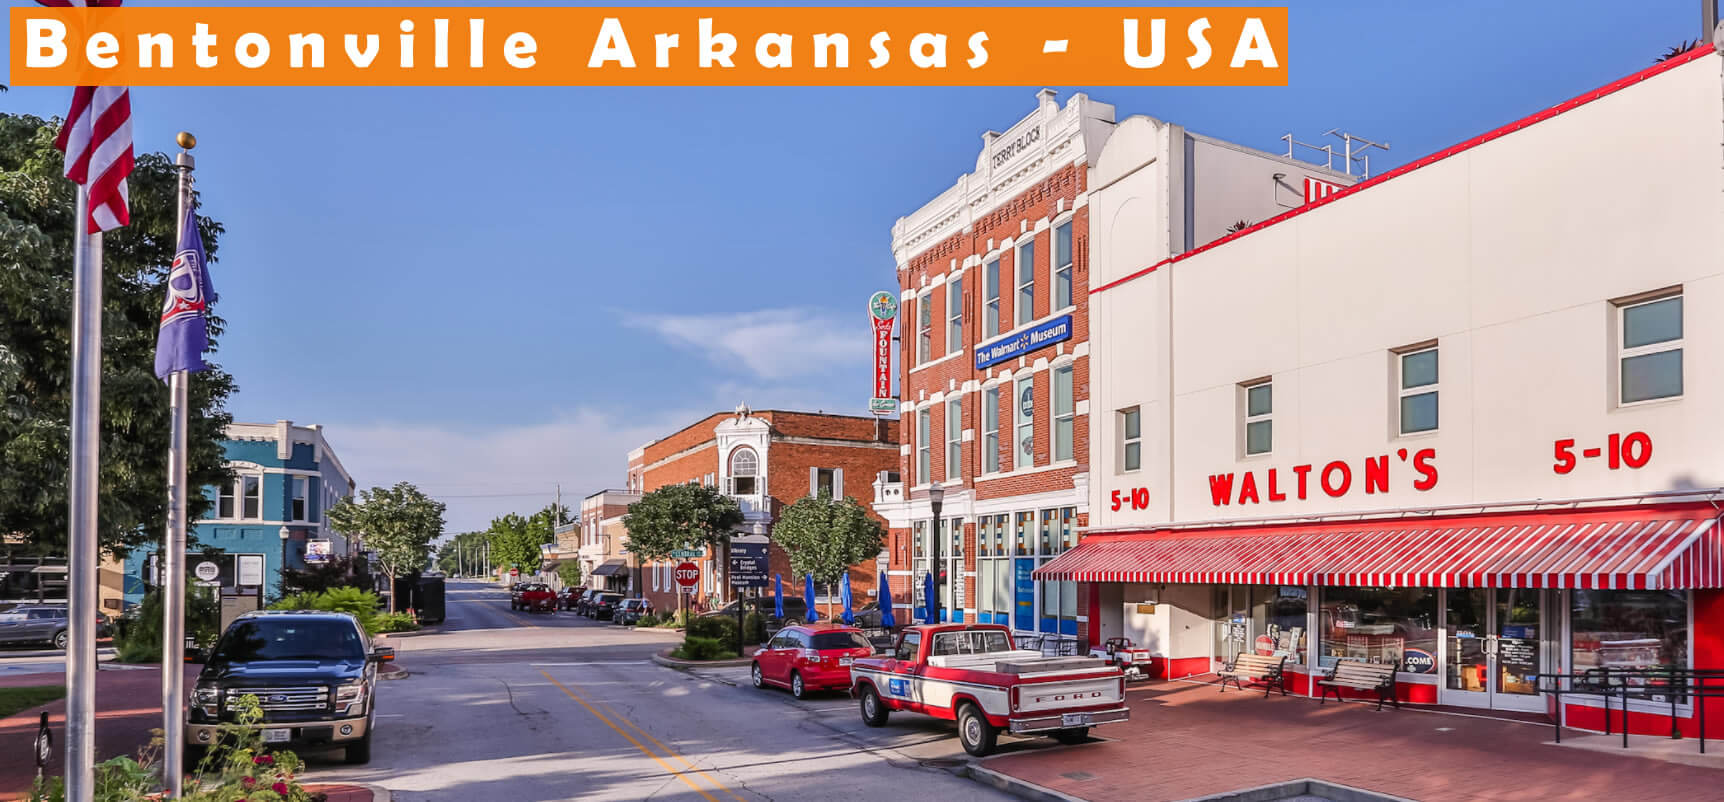 Bentonville Arkansas   EUA